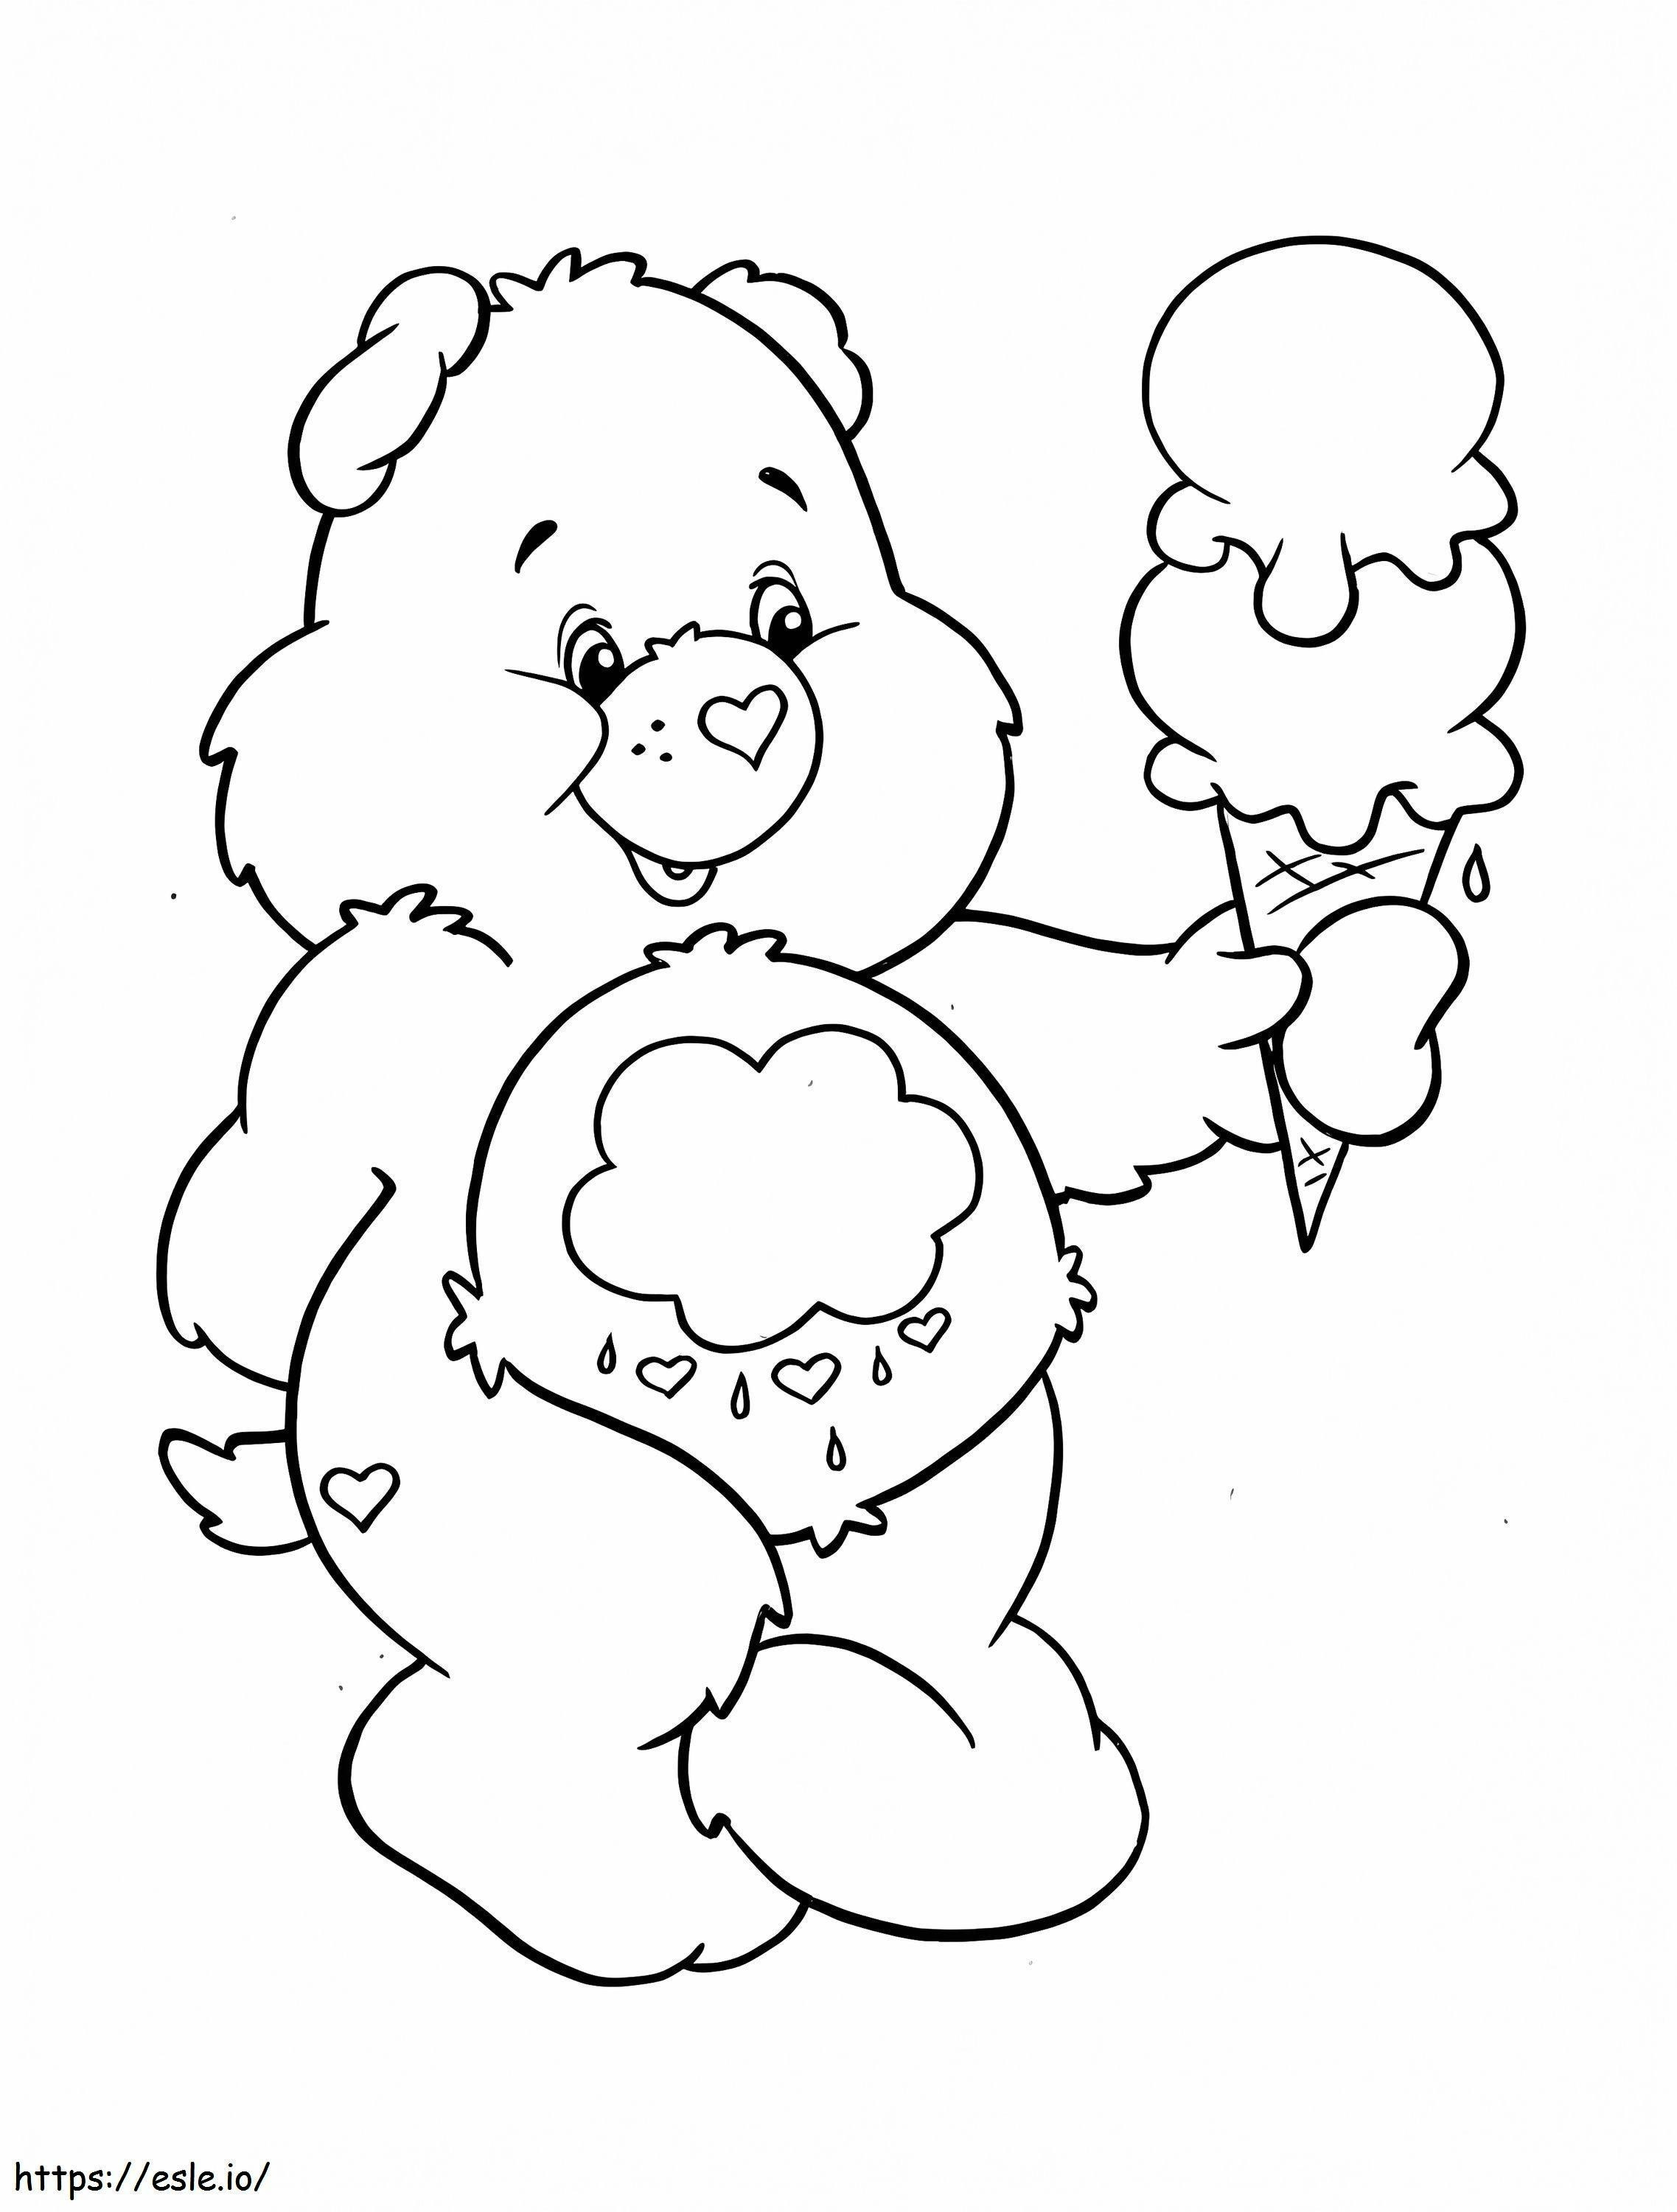 Grumpy Bear coloring page